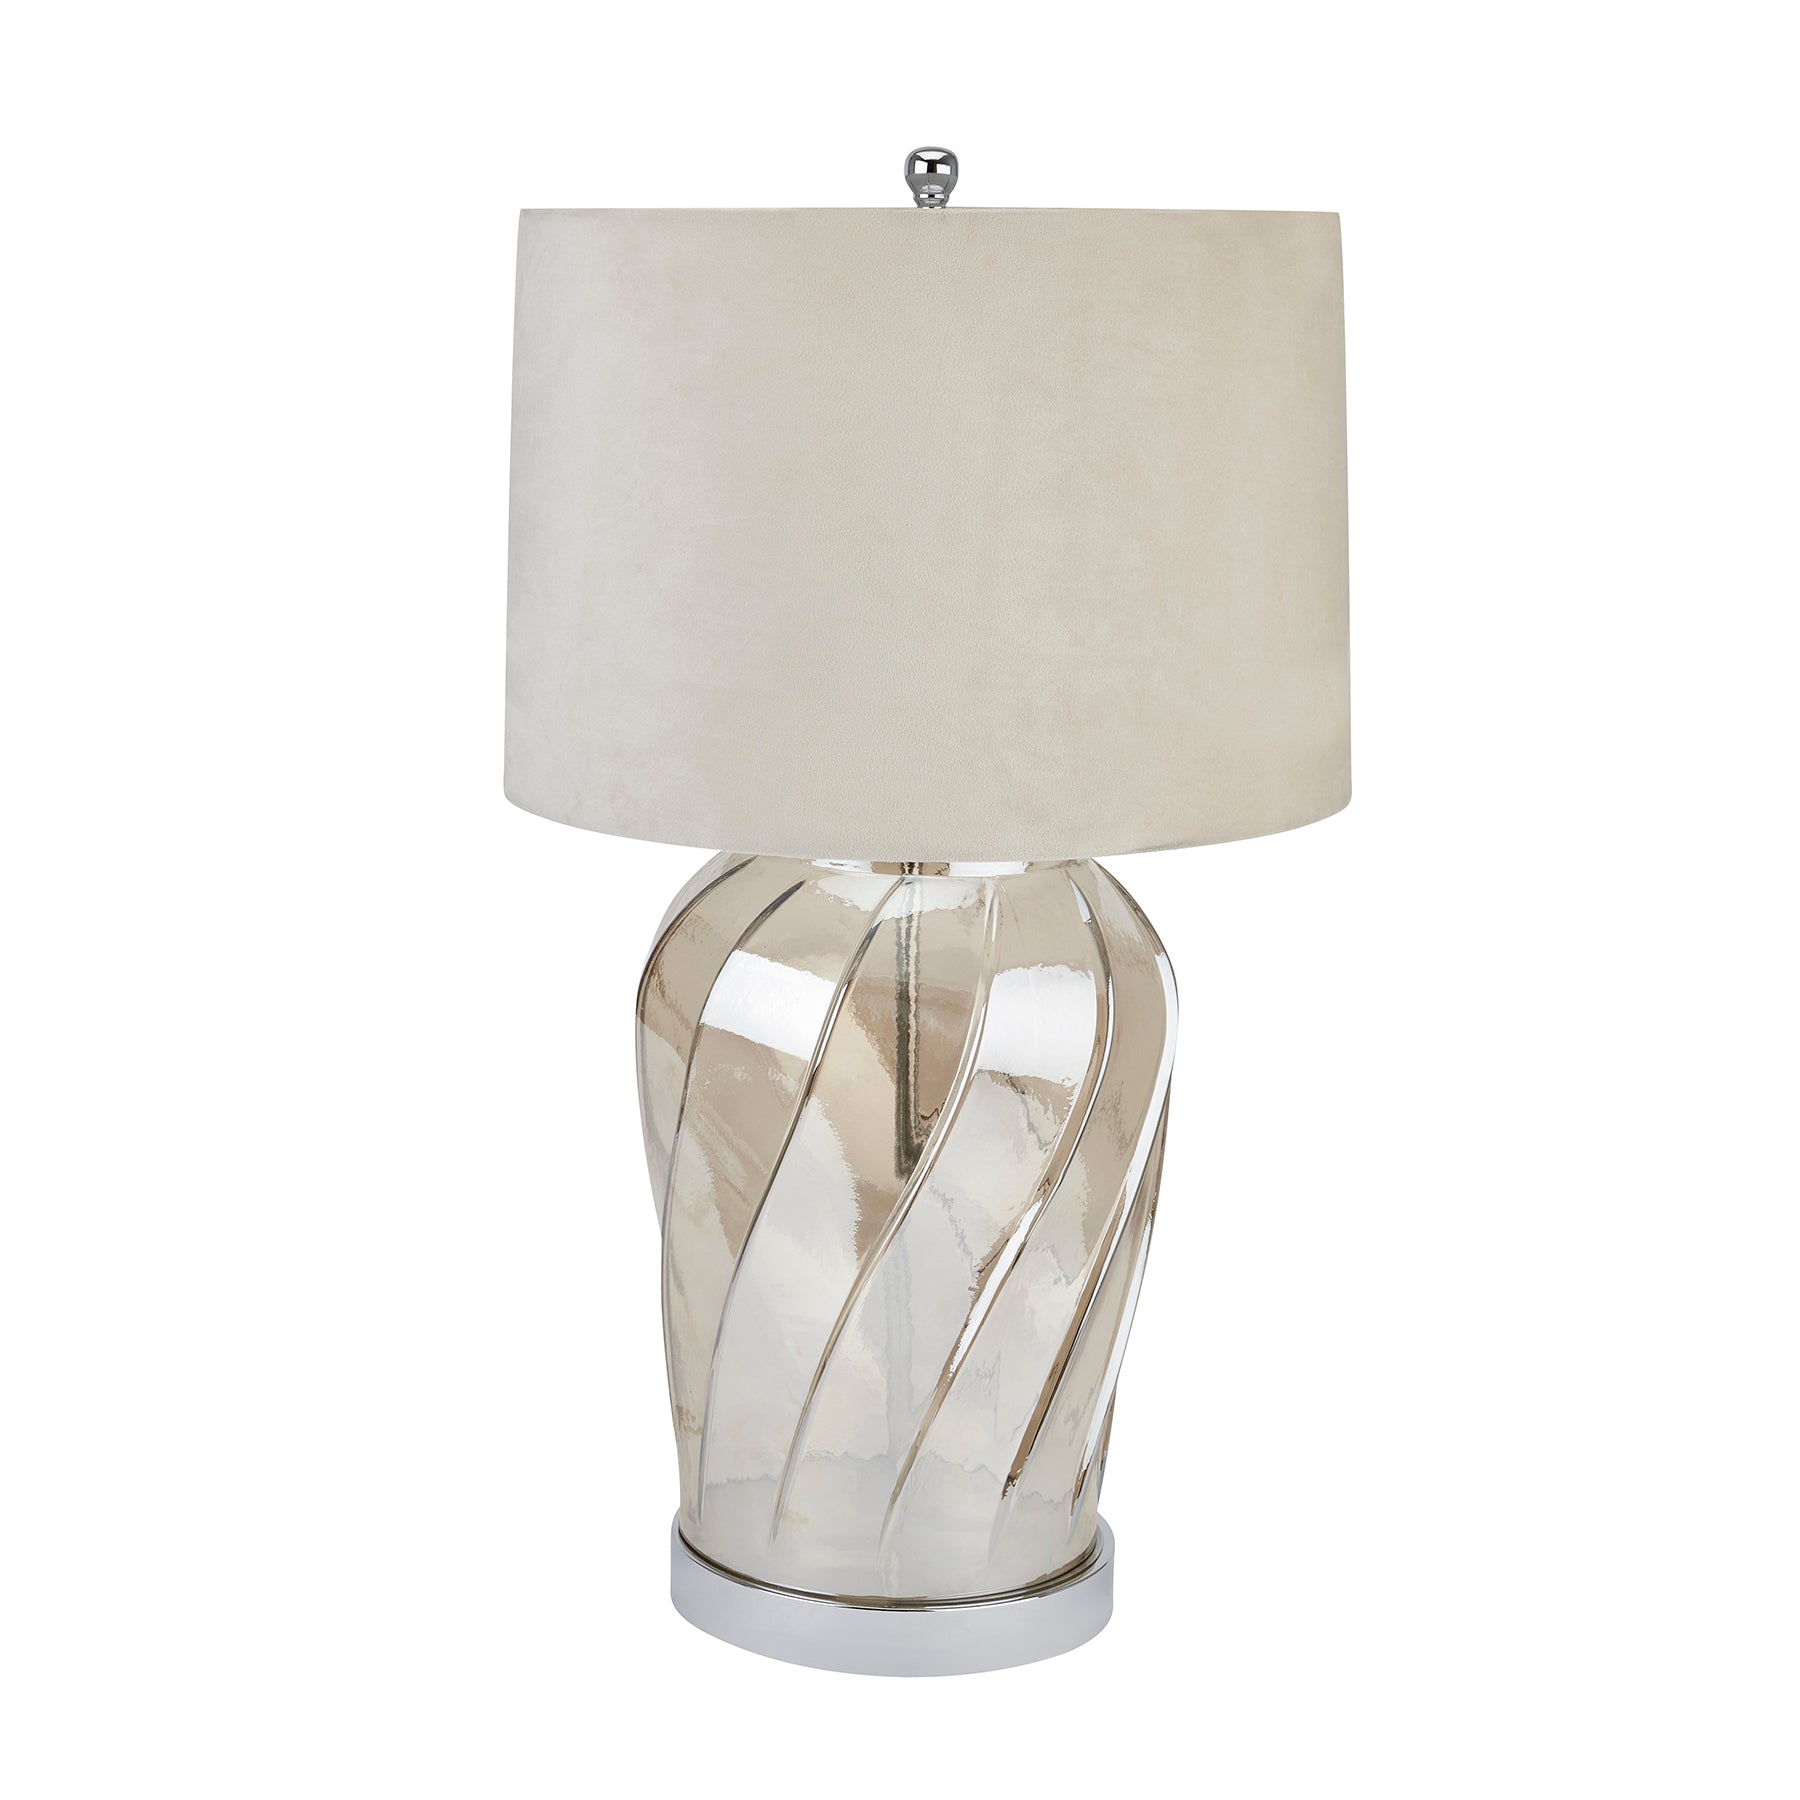 View Ambassador Metallic Glass Lamp With Velvet Shade information